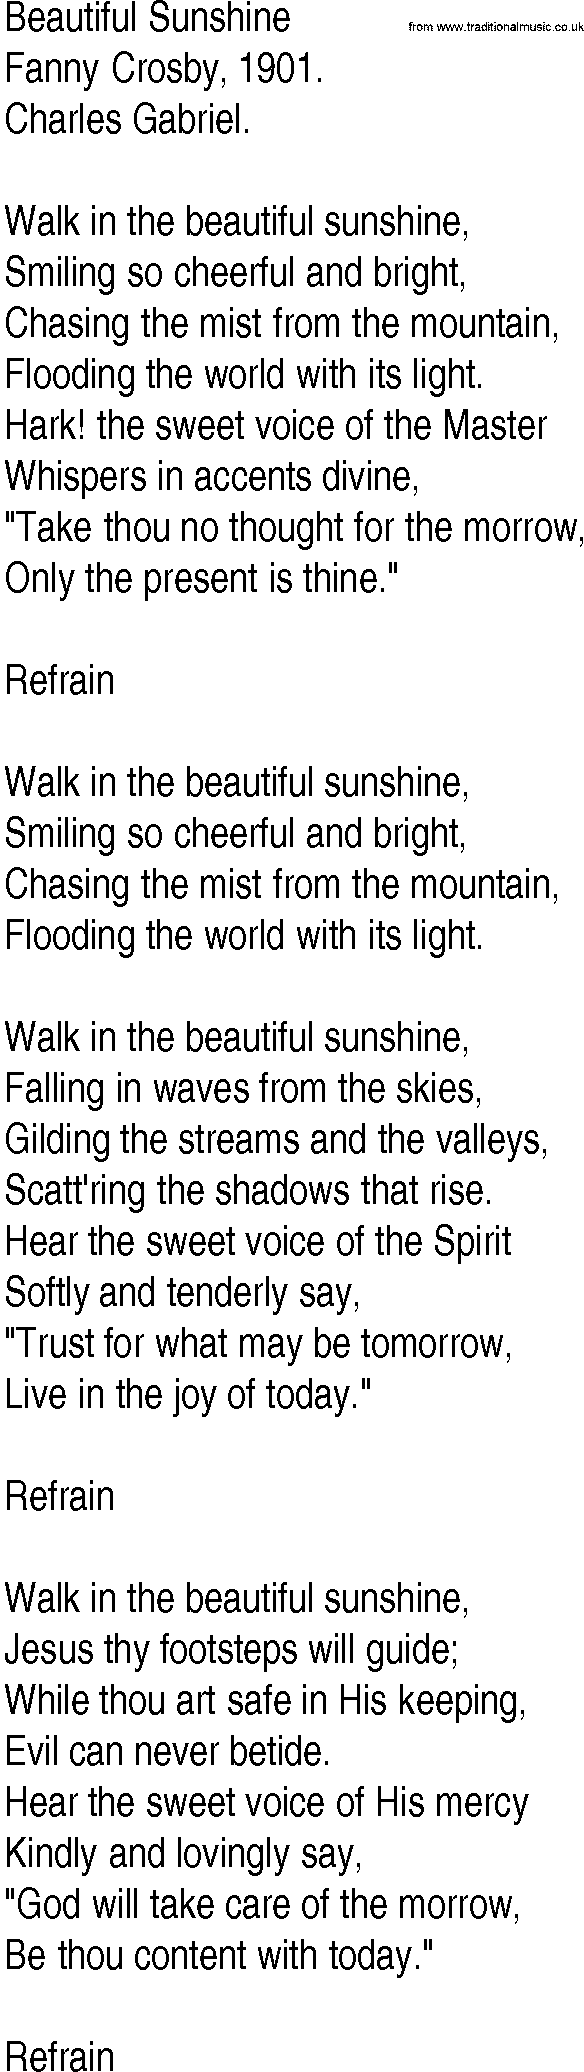 Hymn and Gospel Song: Beautiful Sunshine by Fanny Crosby lyrics